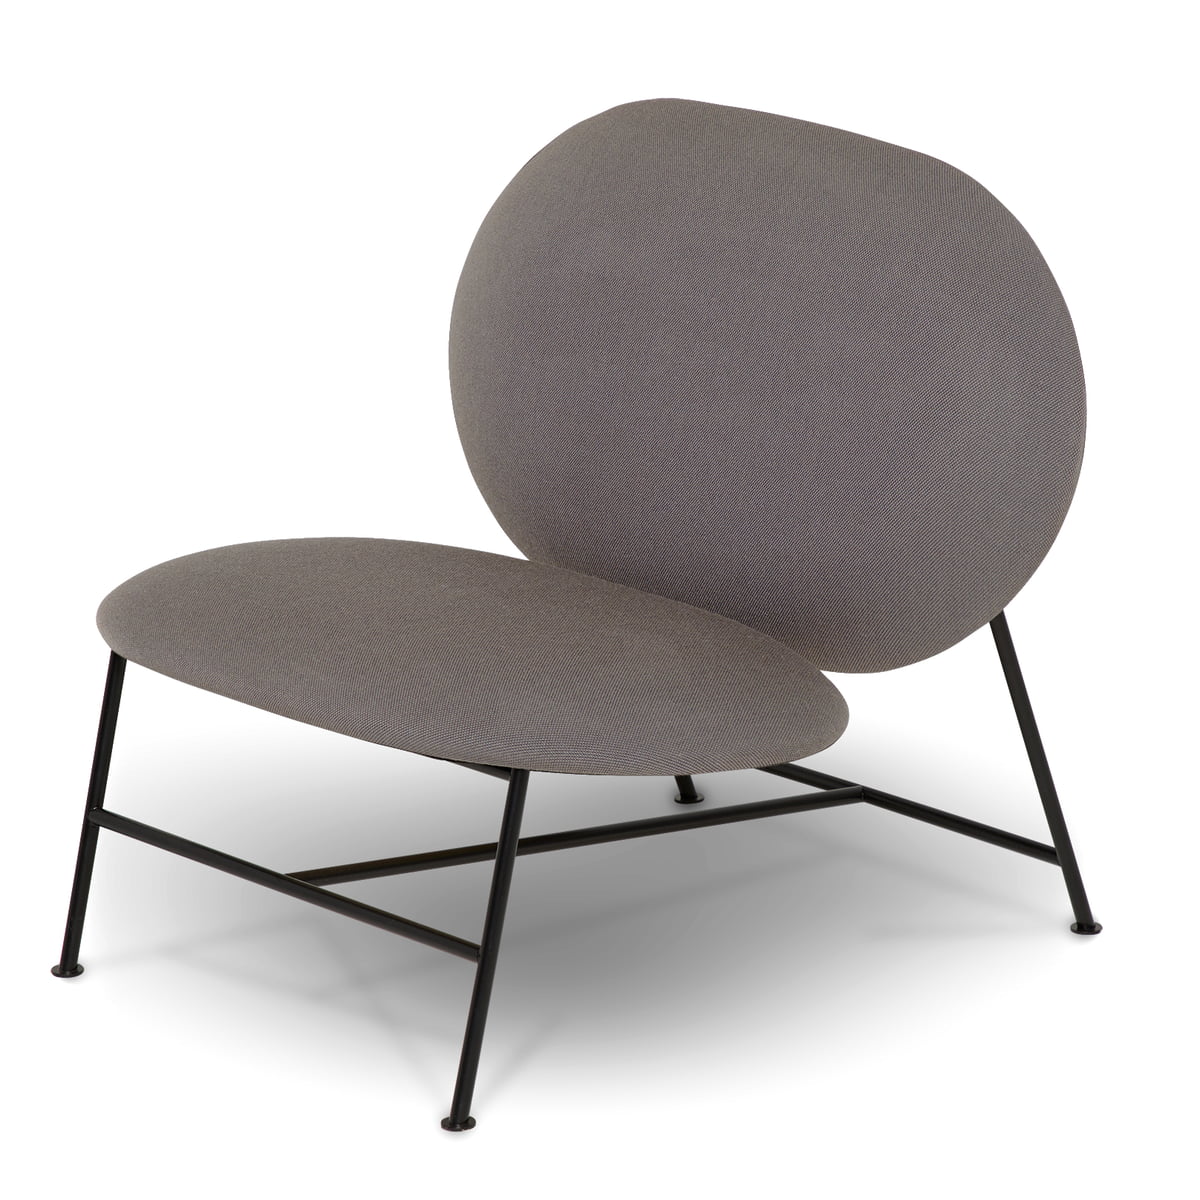 Northern - Oblong Lounge Chair, schwarz / grau (Brusvik 05)